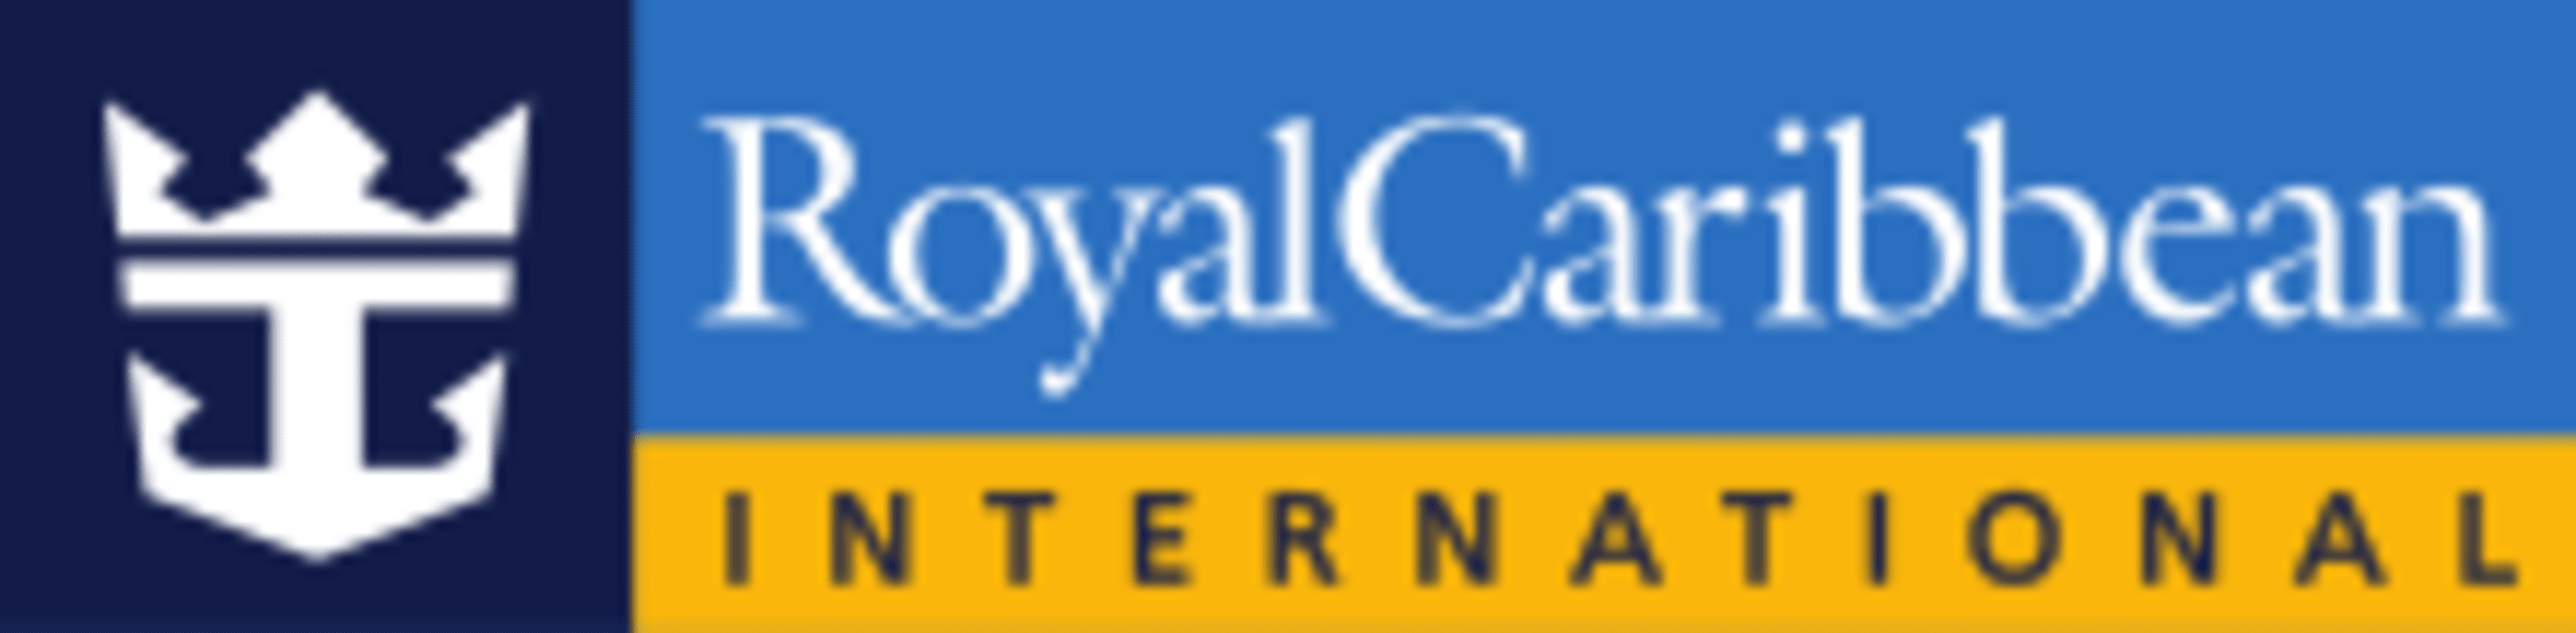 Royal CaribbeanCode